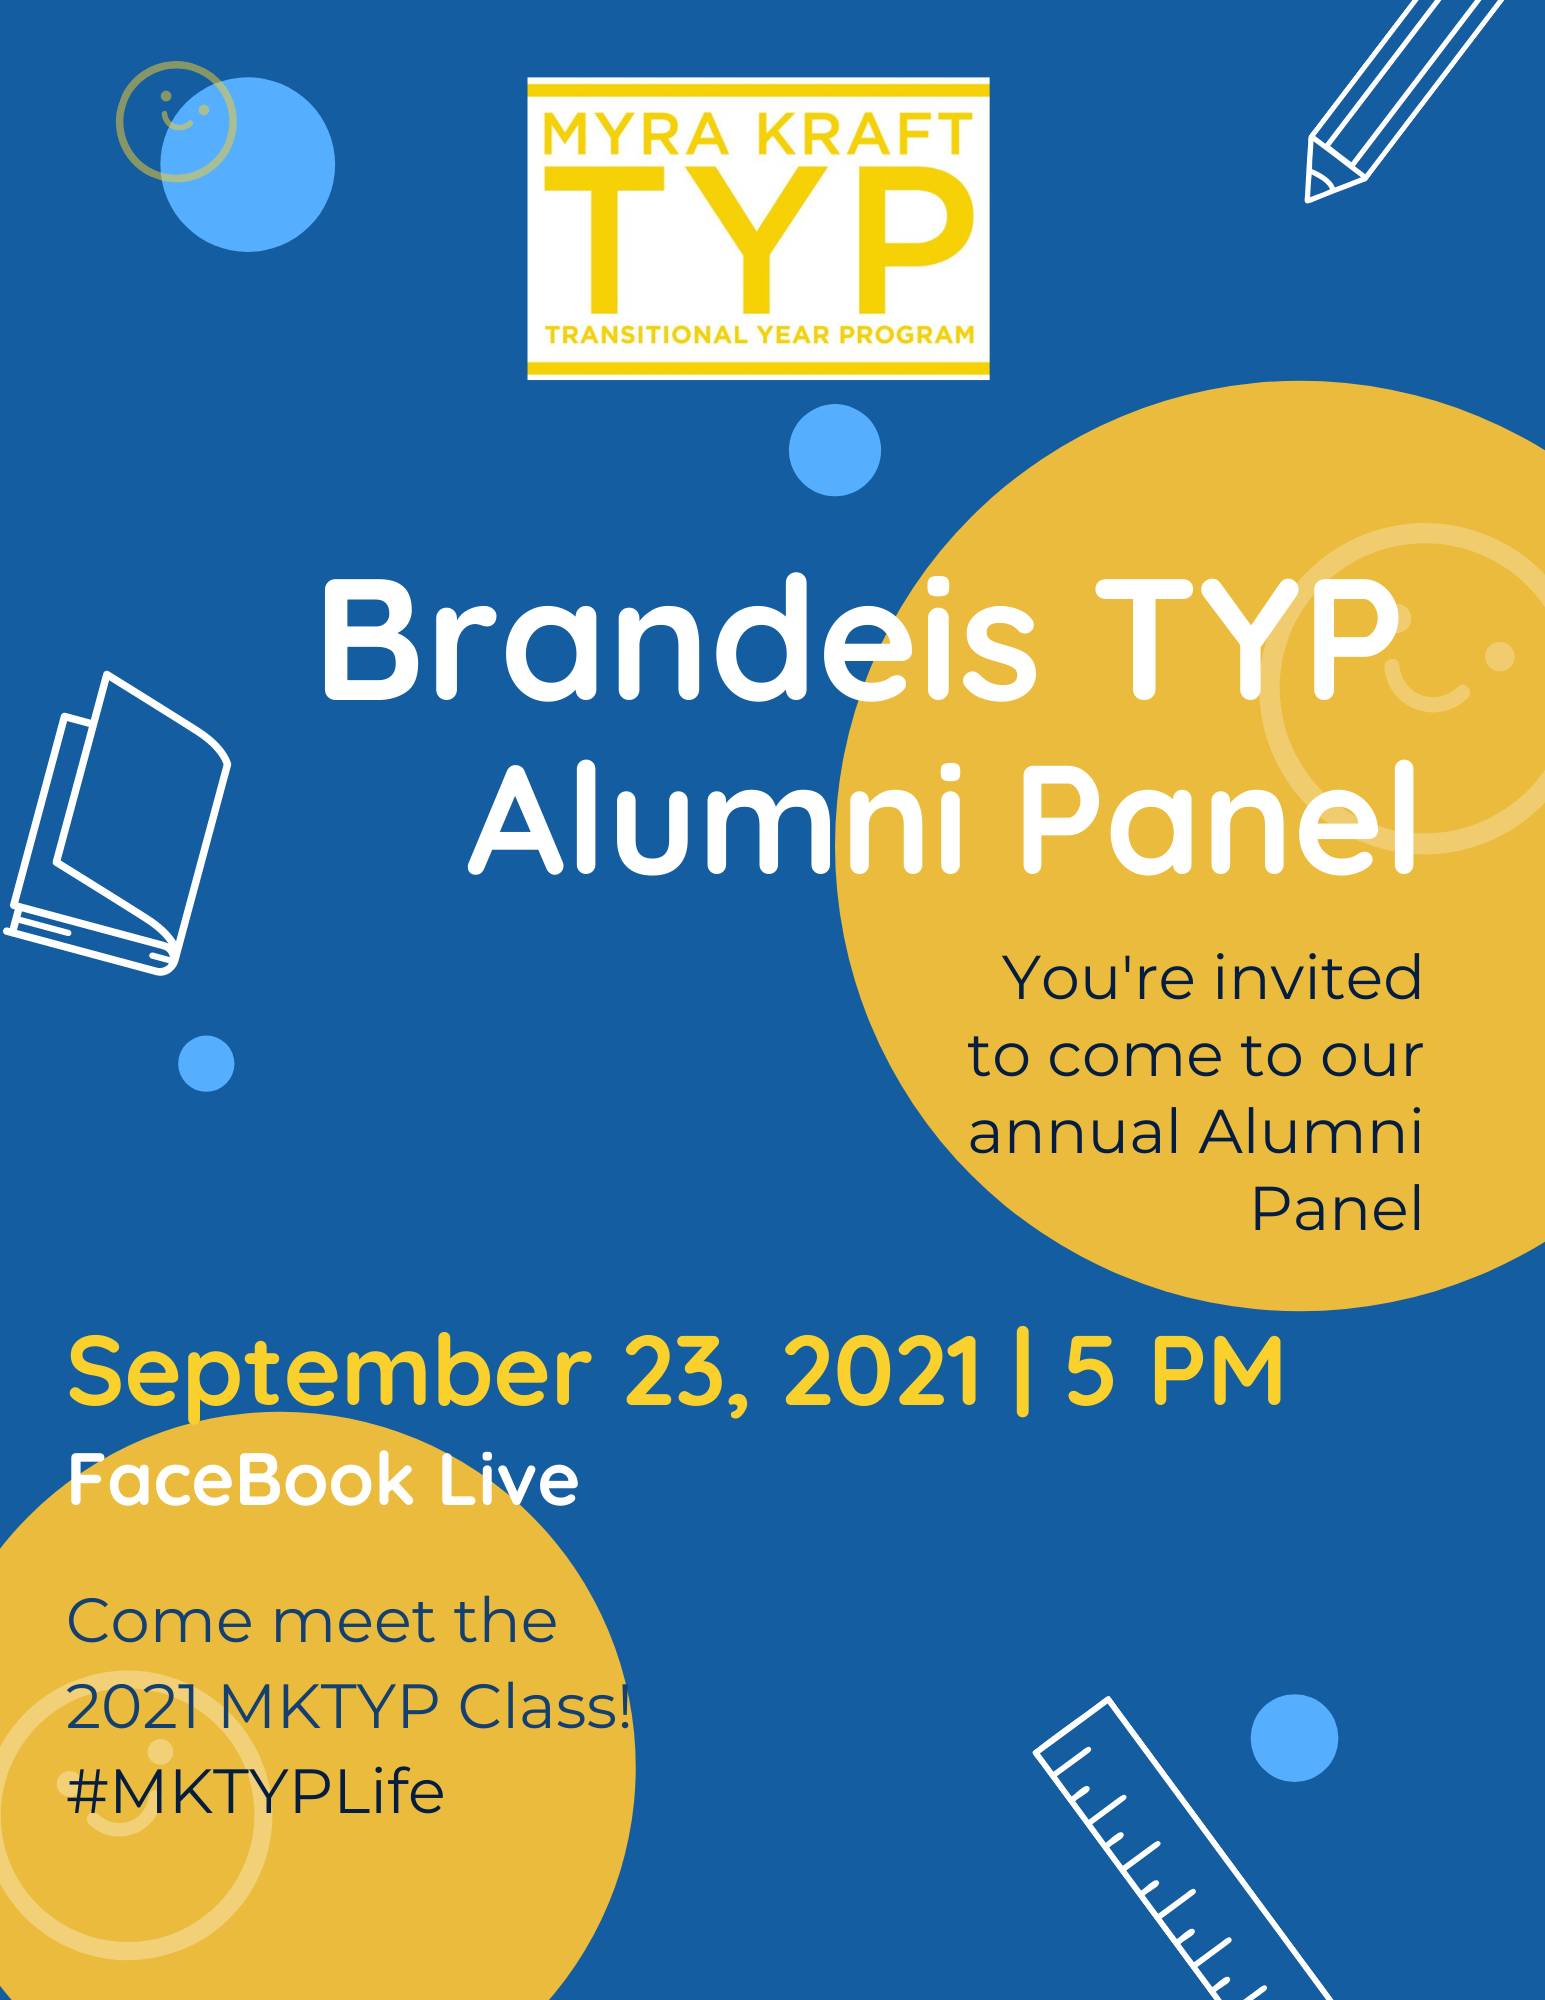 Flyer for the Bradeis TYP Alumni Panel